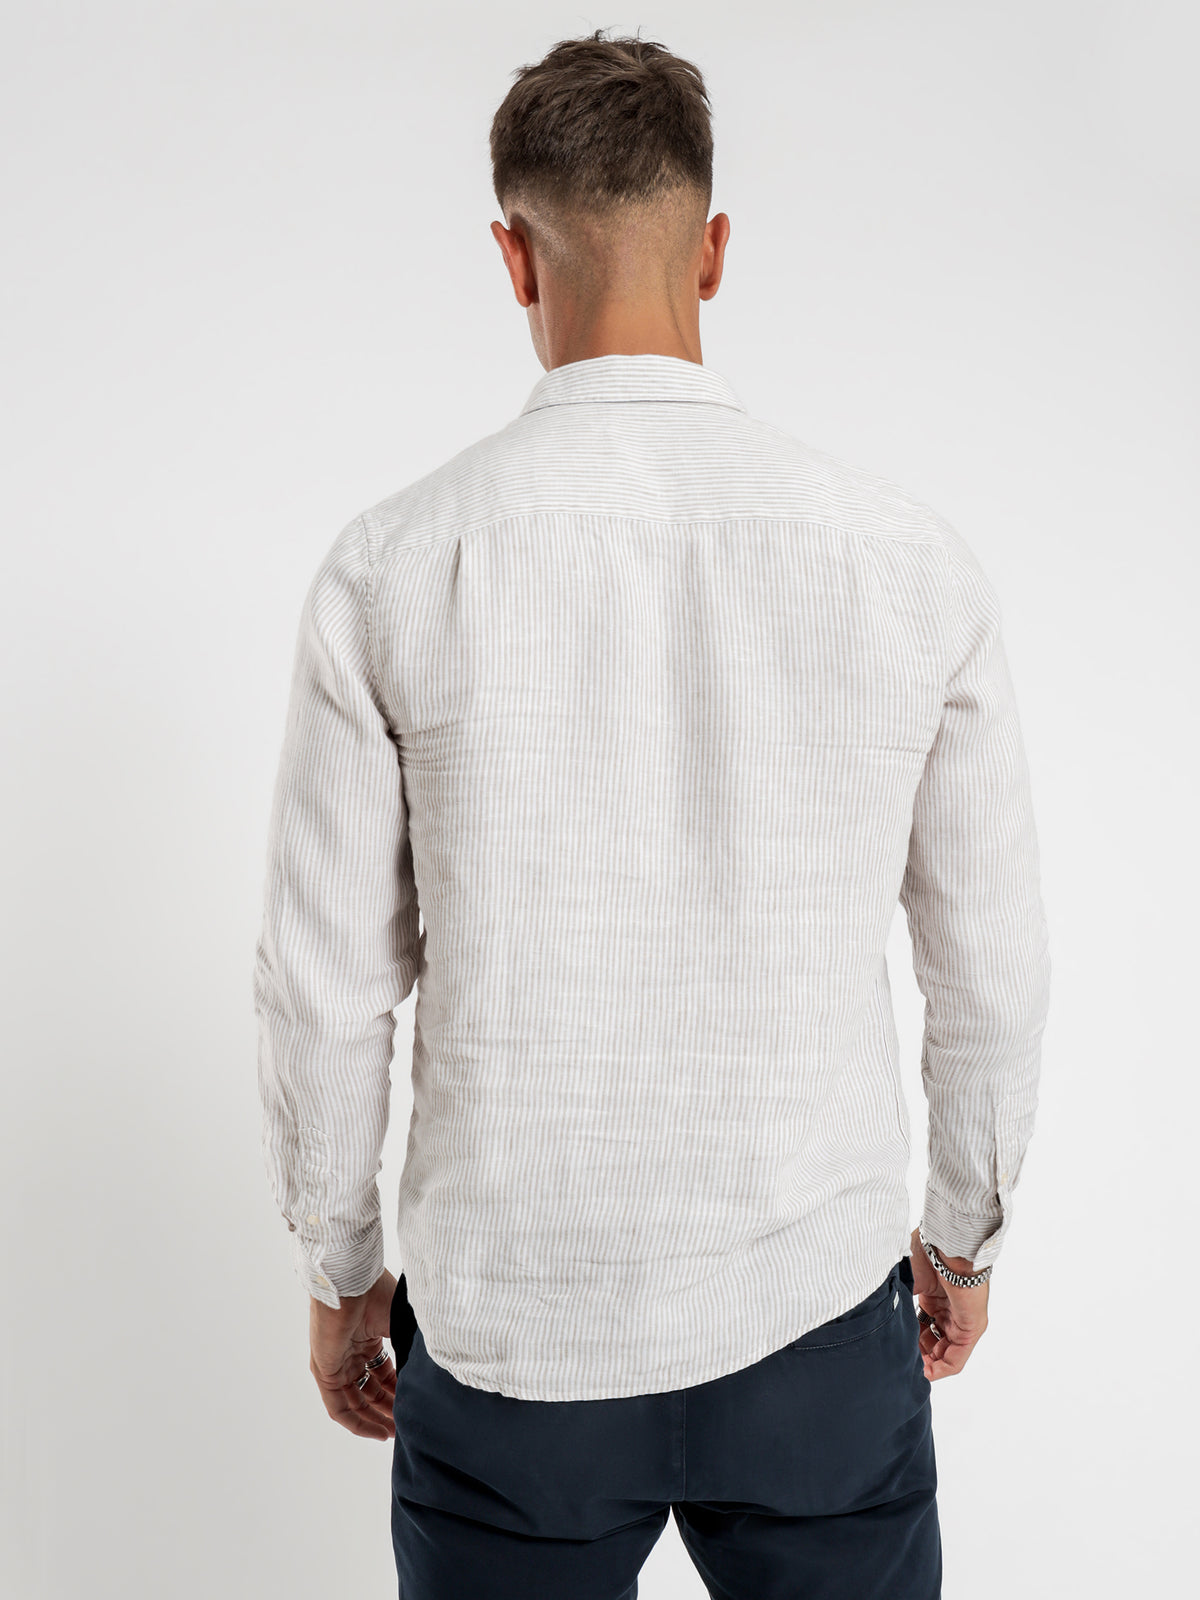 Hampton Long Sleeve Linen Shirt in Oatmeal Stripe